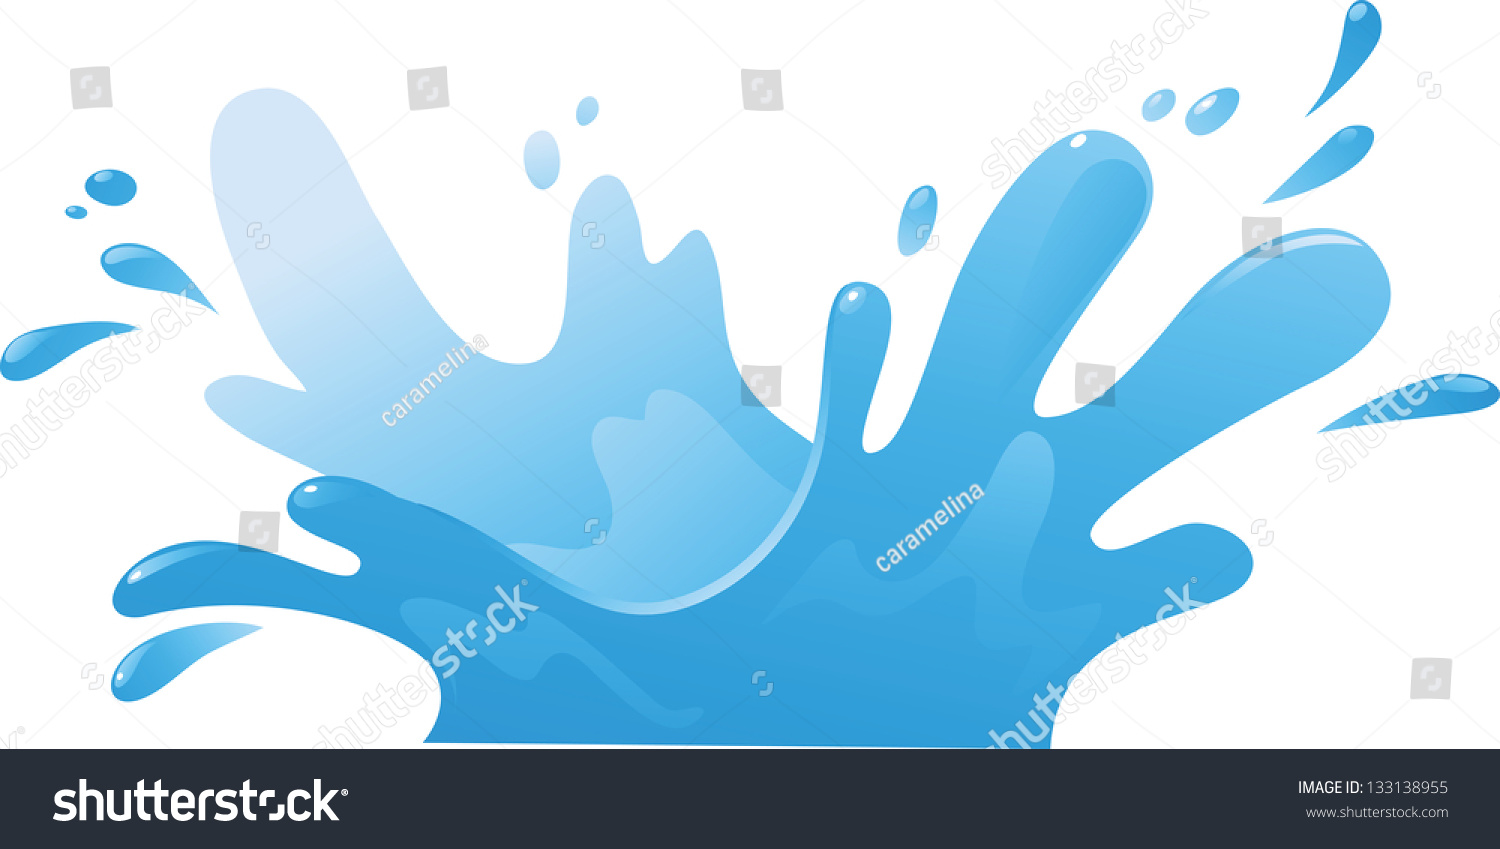 Illustration Of Water Splash - 133138955 : Shutterstock